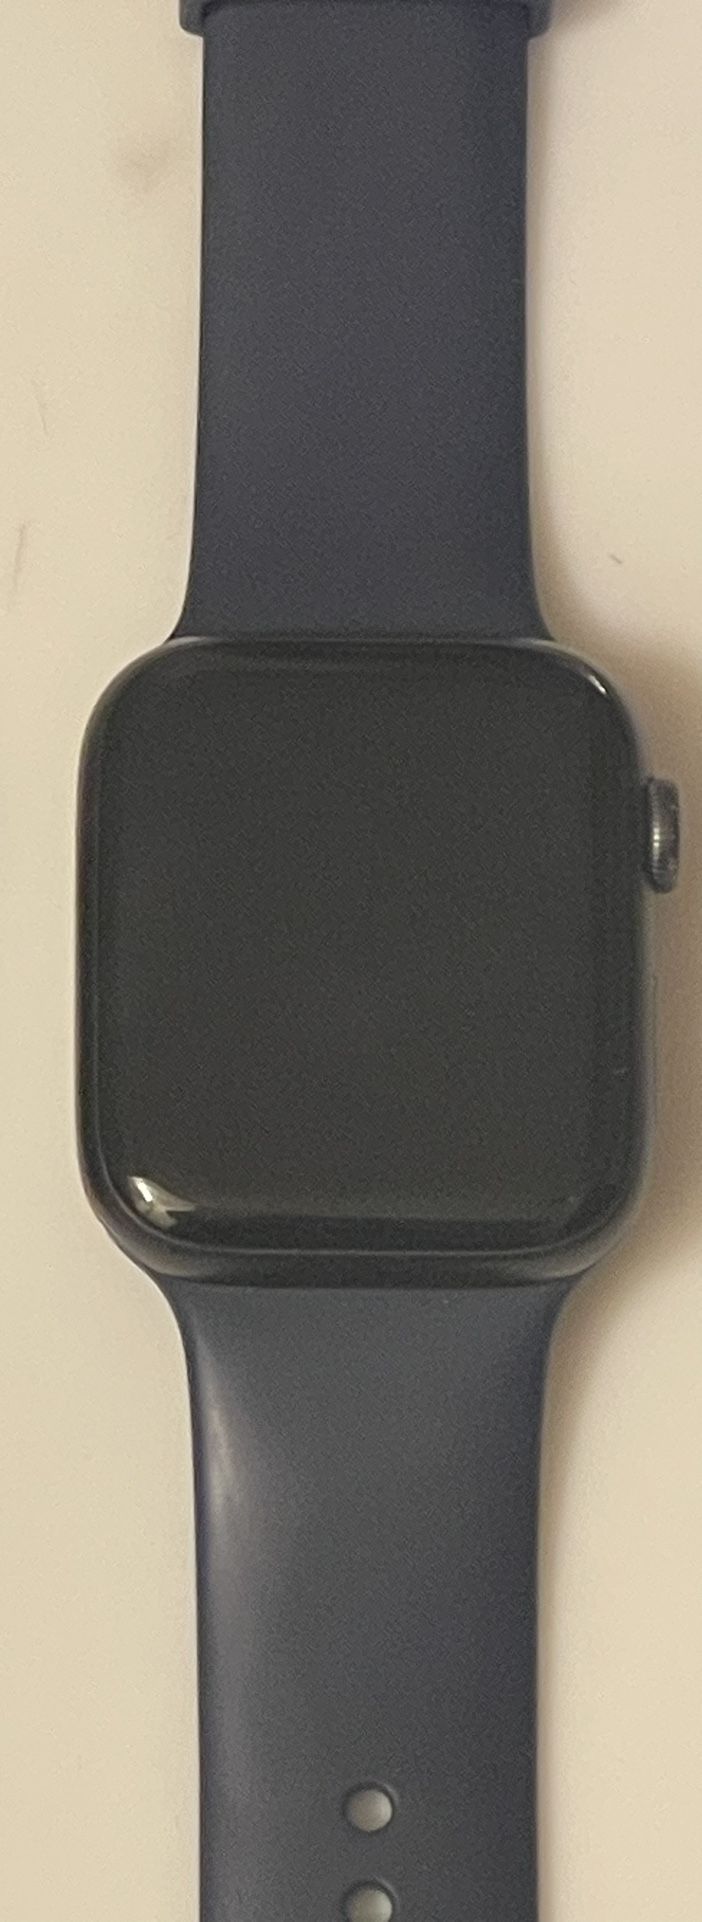 Apple Watch Series 6 GPS+ Cellular